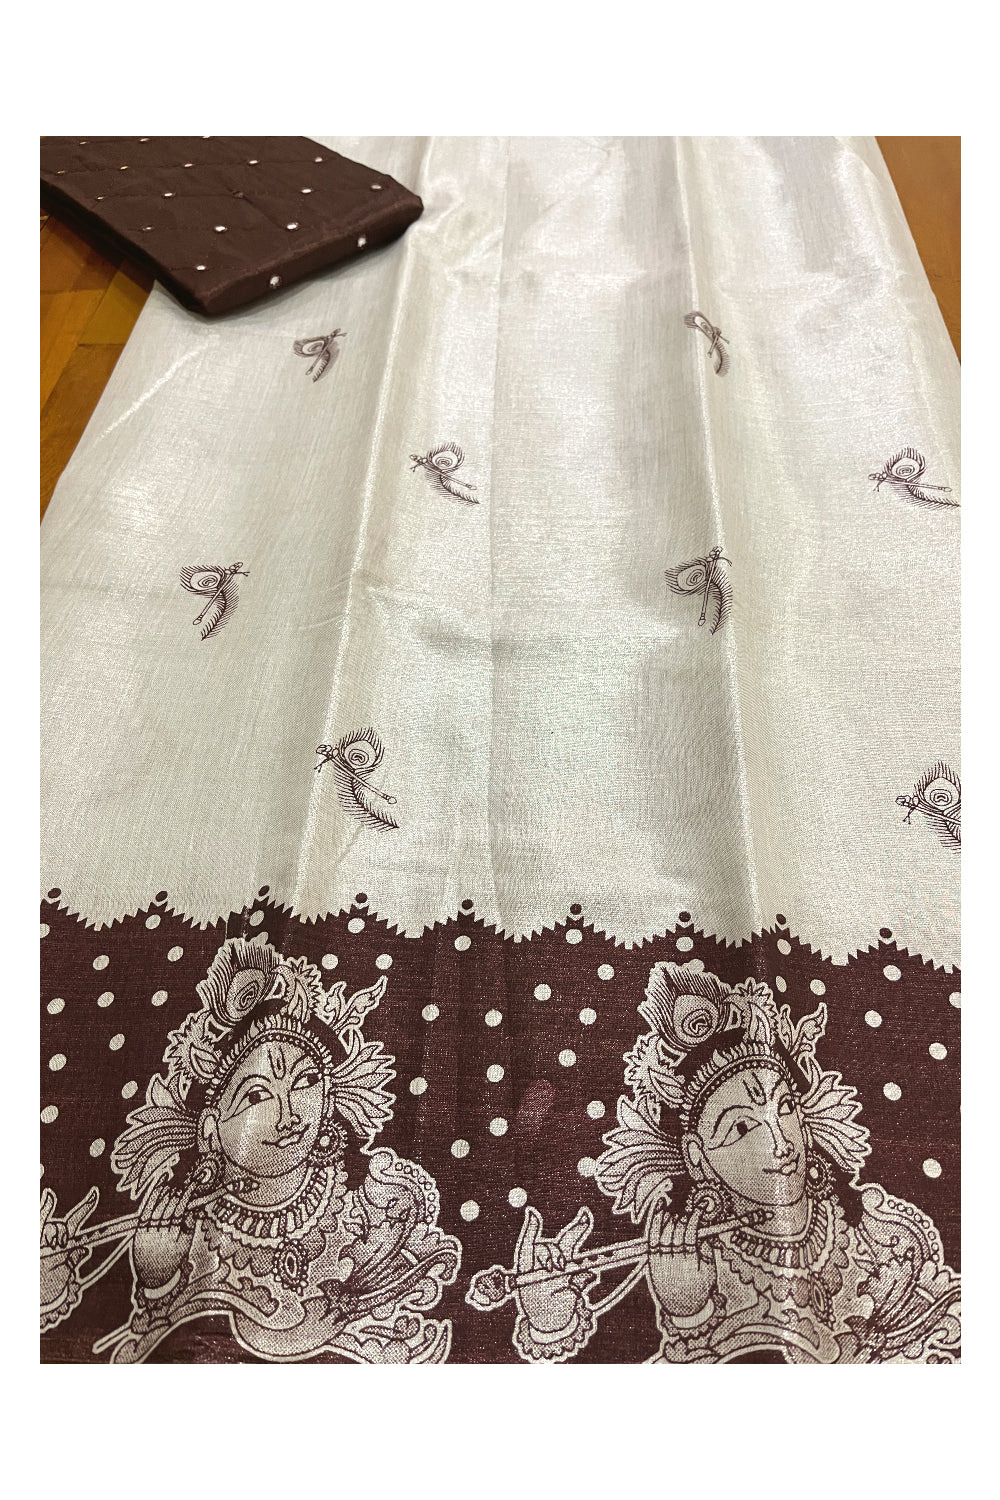 Kerala Silver Tissue Block Printed Pavada and Brown Designer Blouse Material for Kids/Girls 4.3 Meters